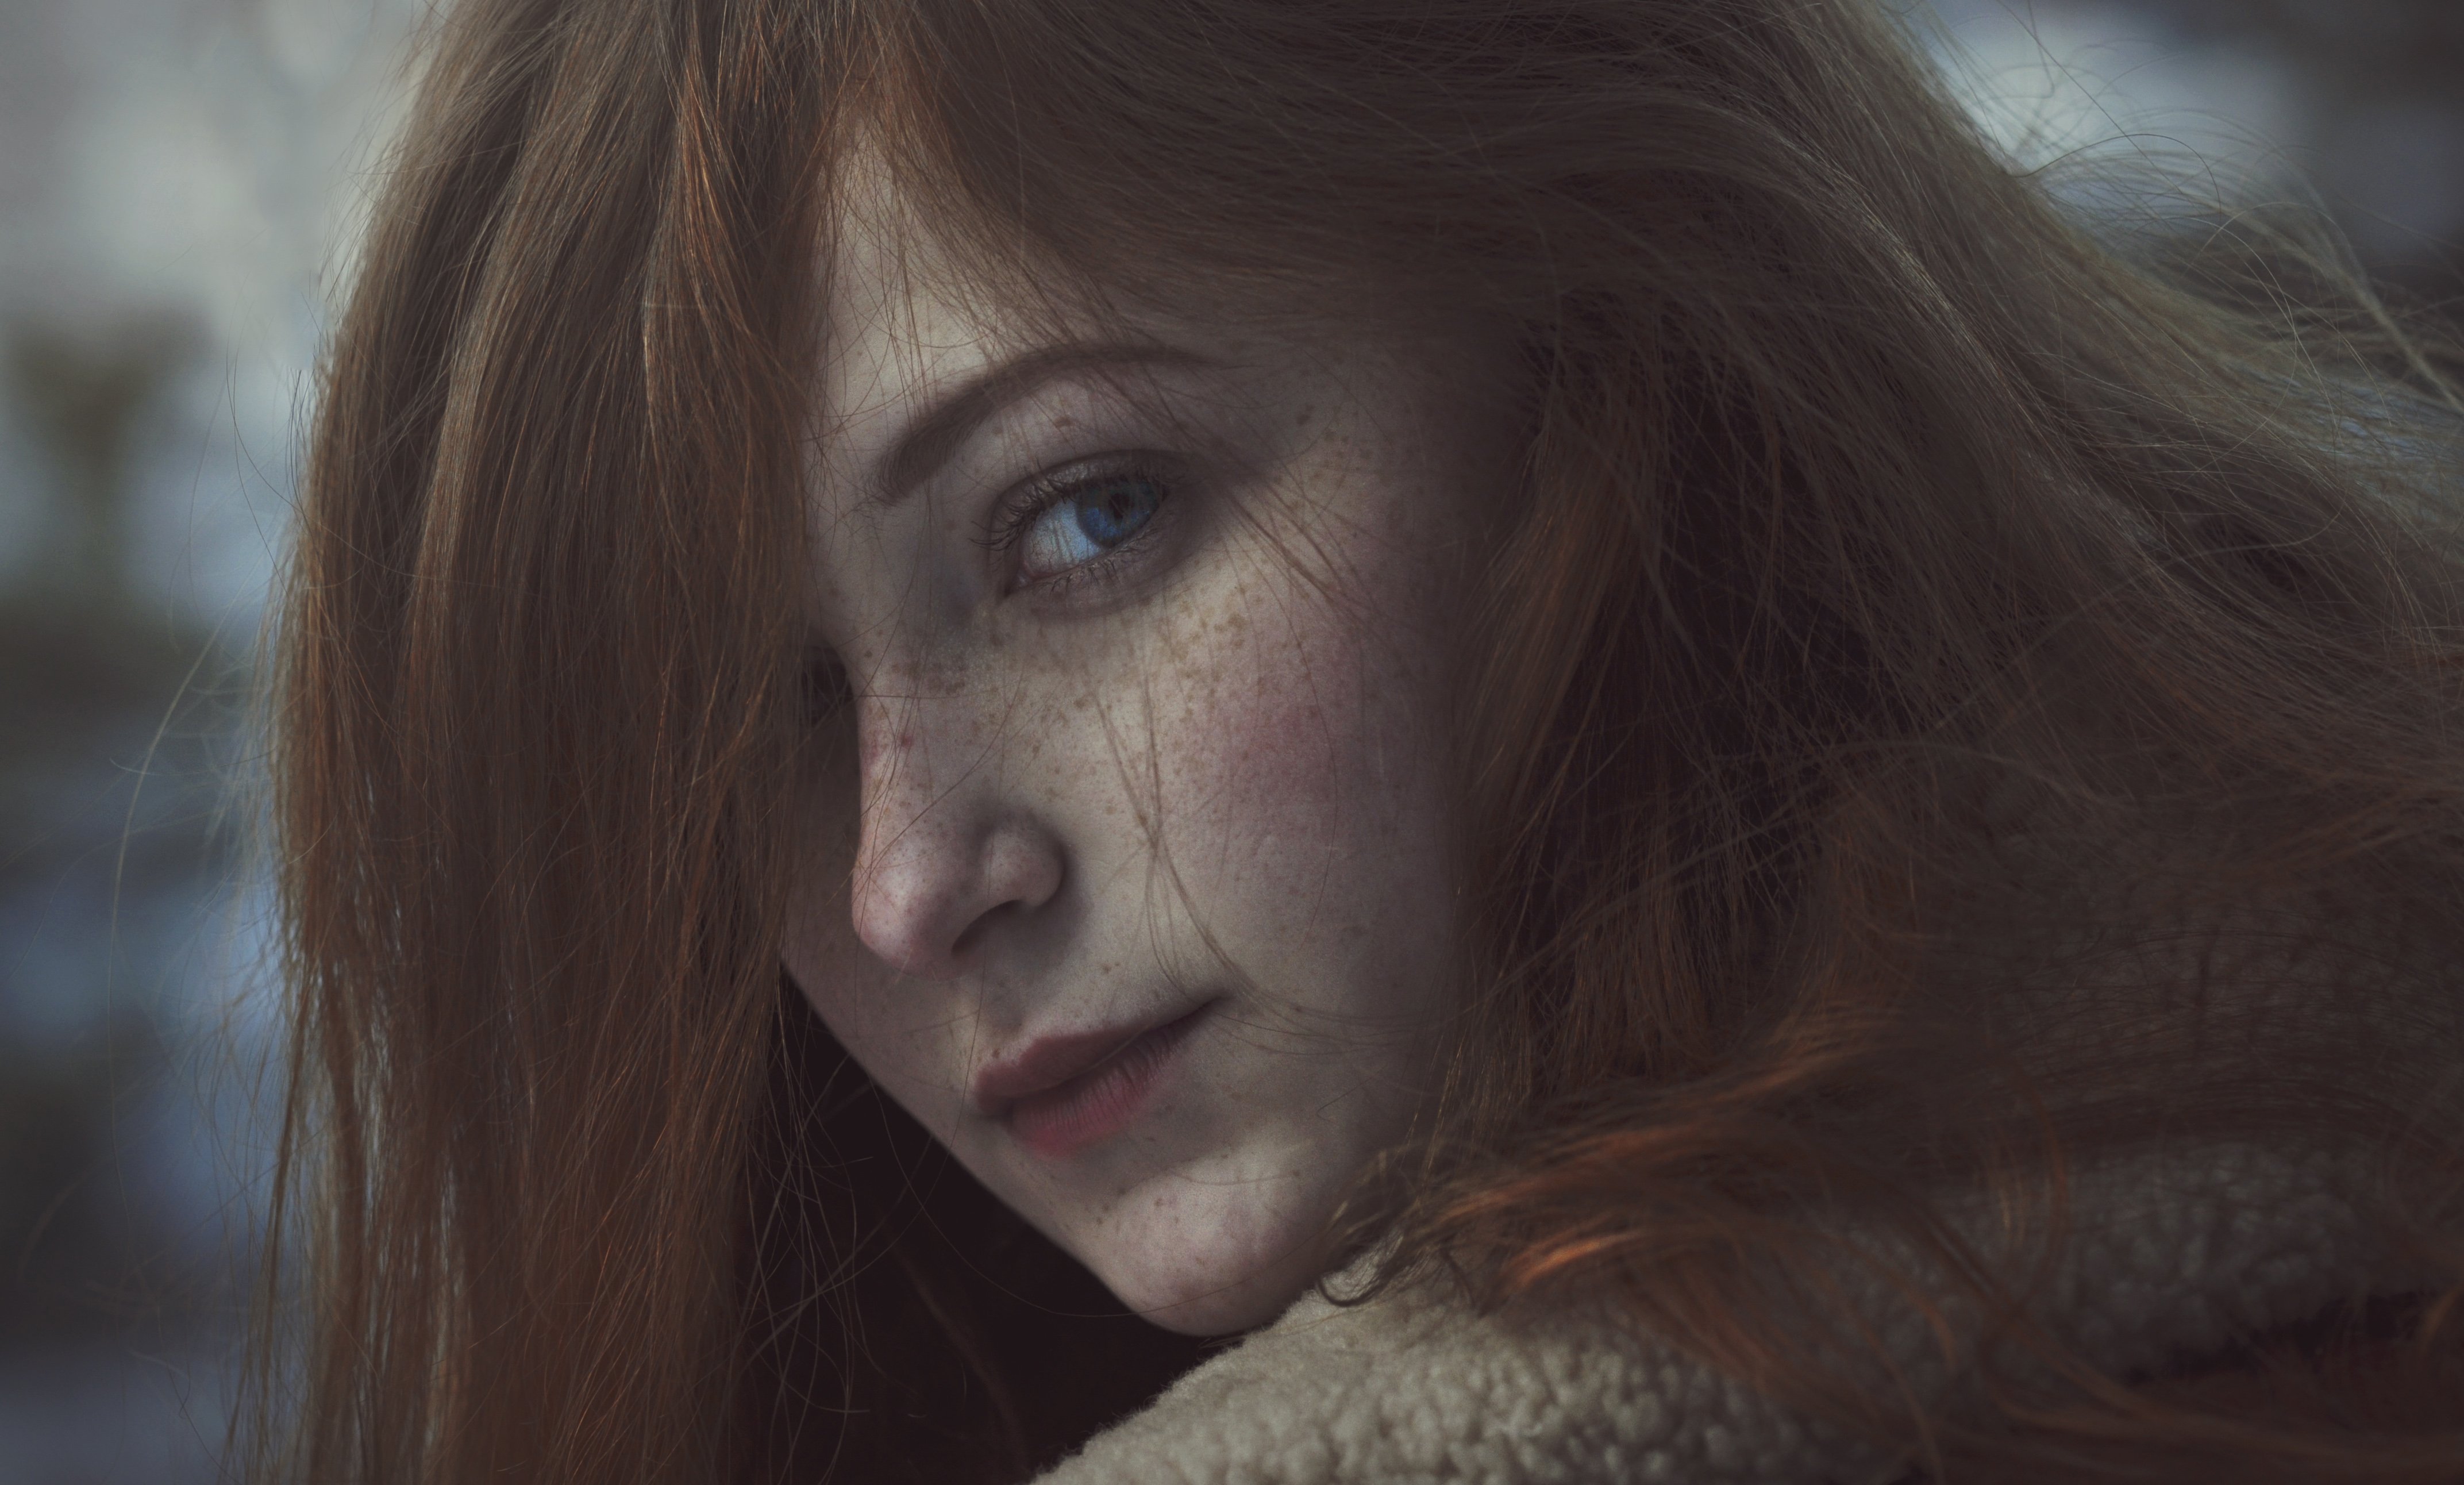 #portrait #girl #redhead #winter #freckles, fineus